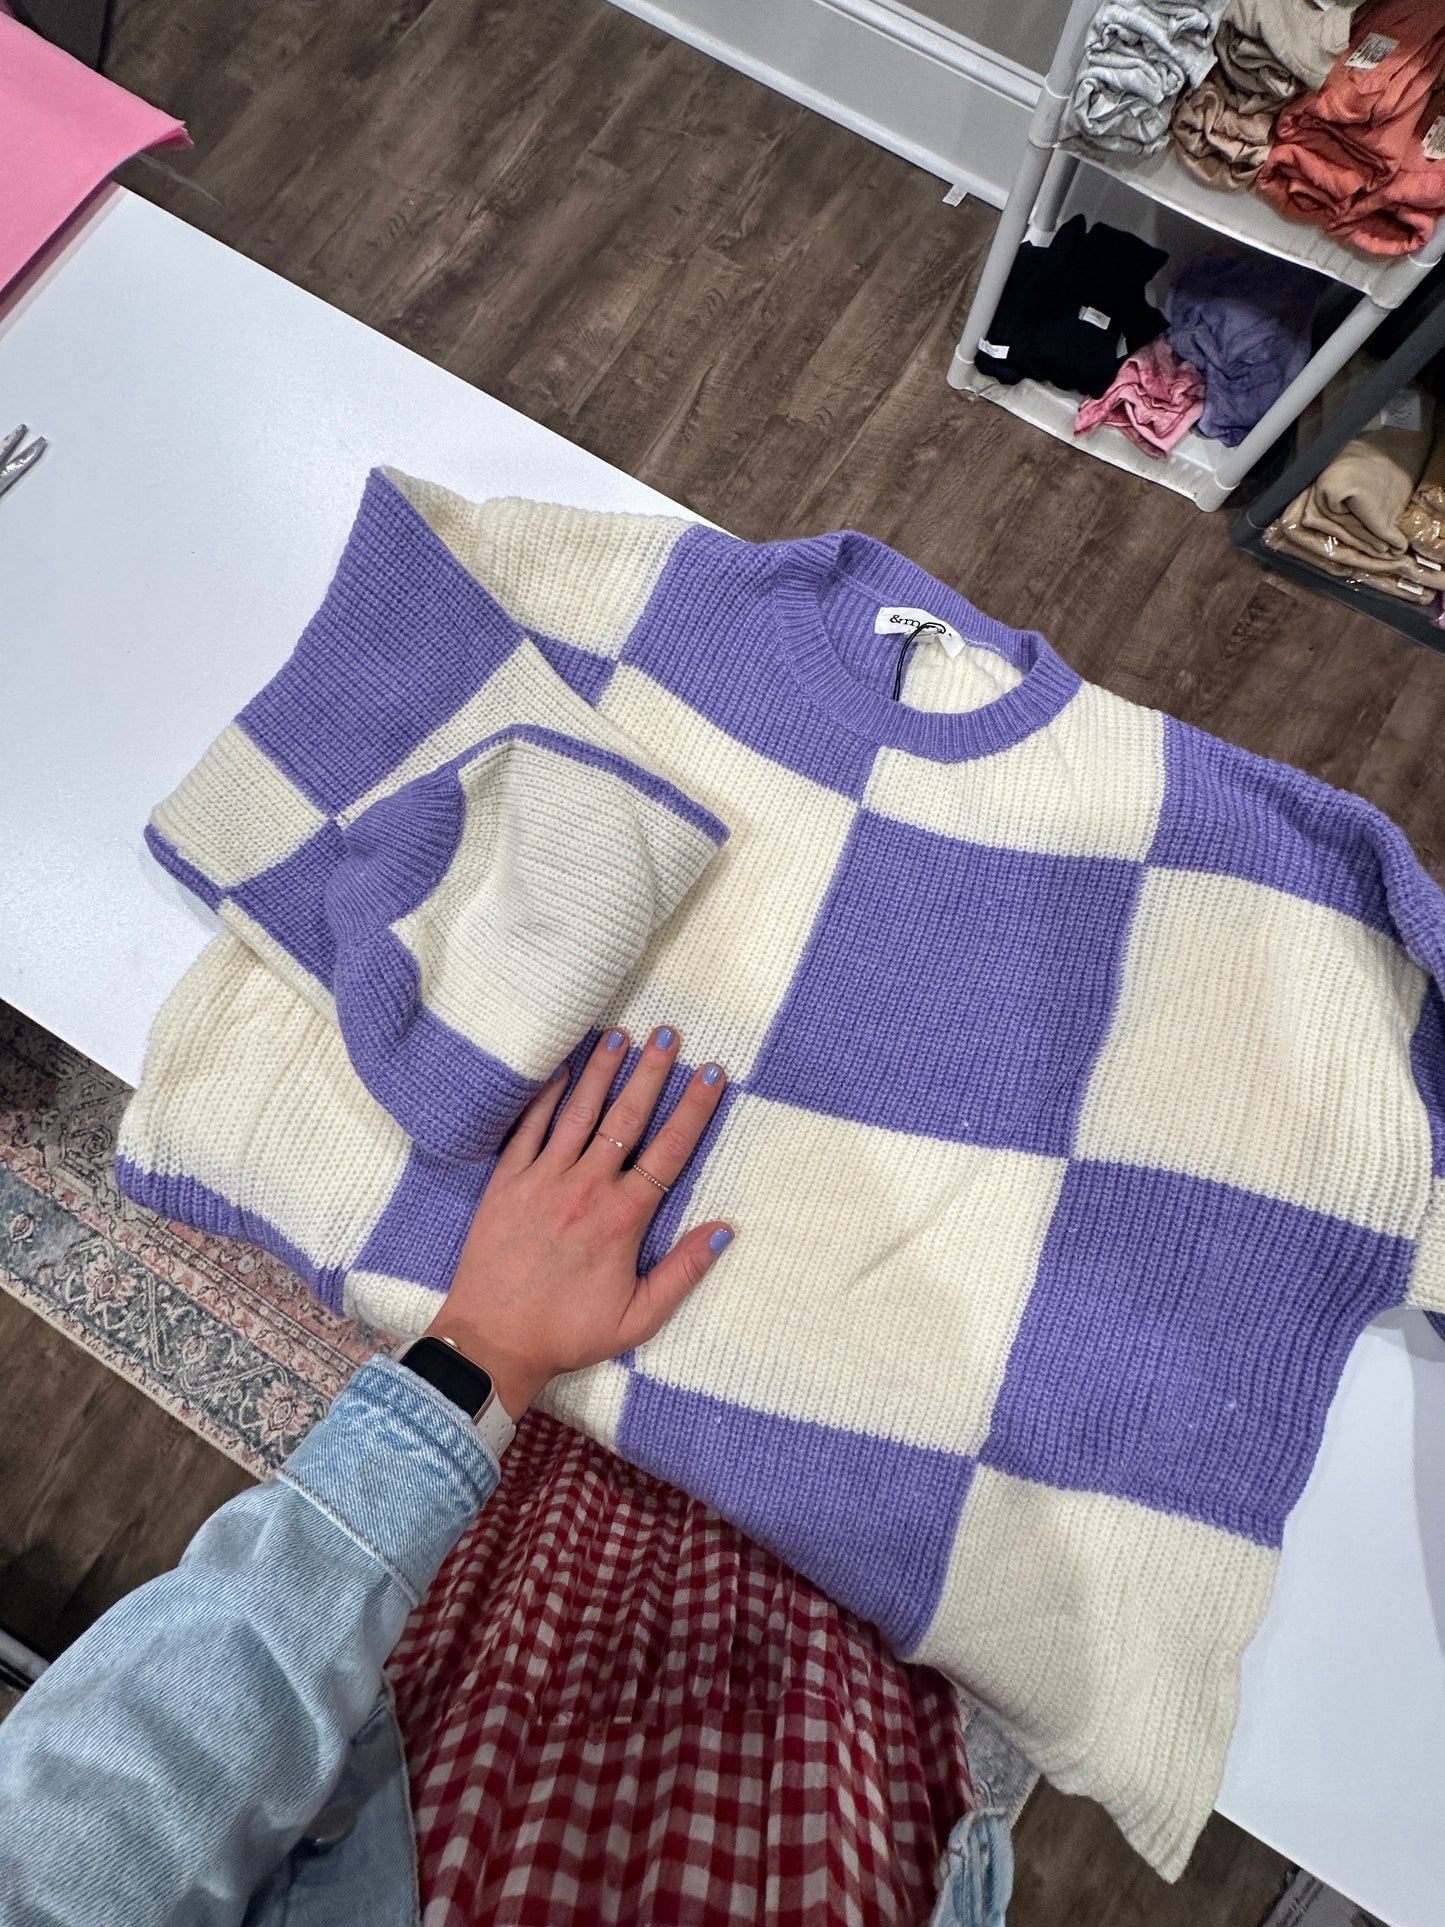 Lavender + Mustard Checker Block Sweater